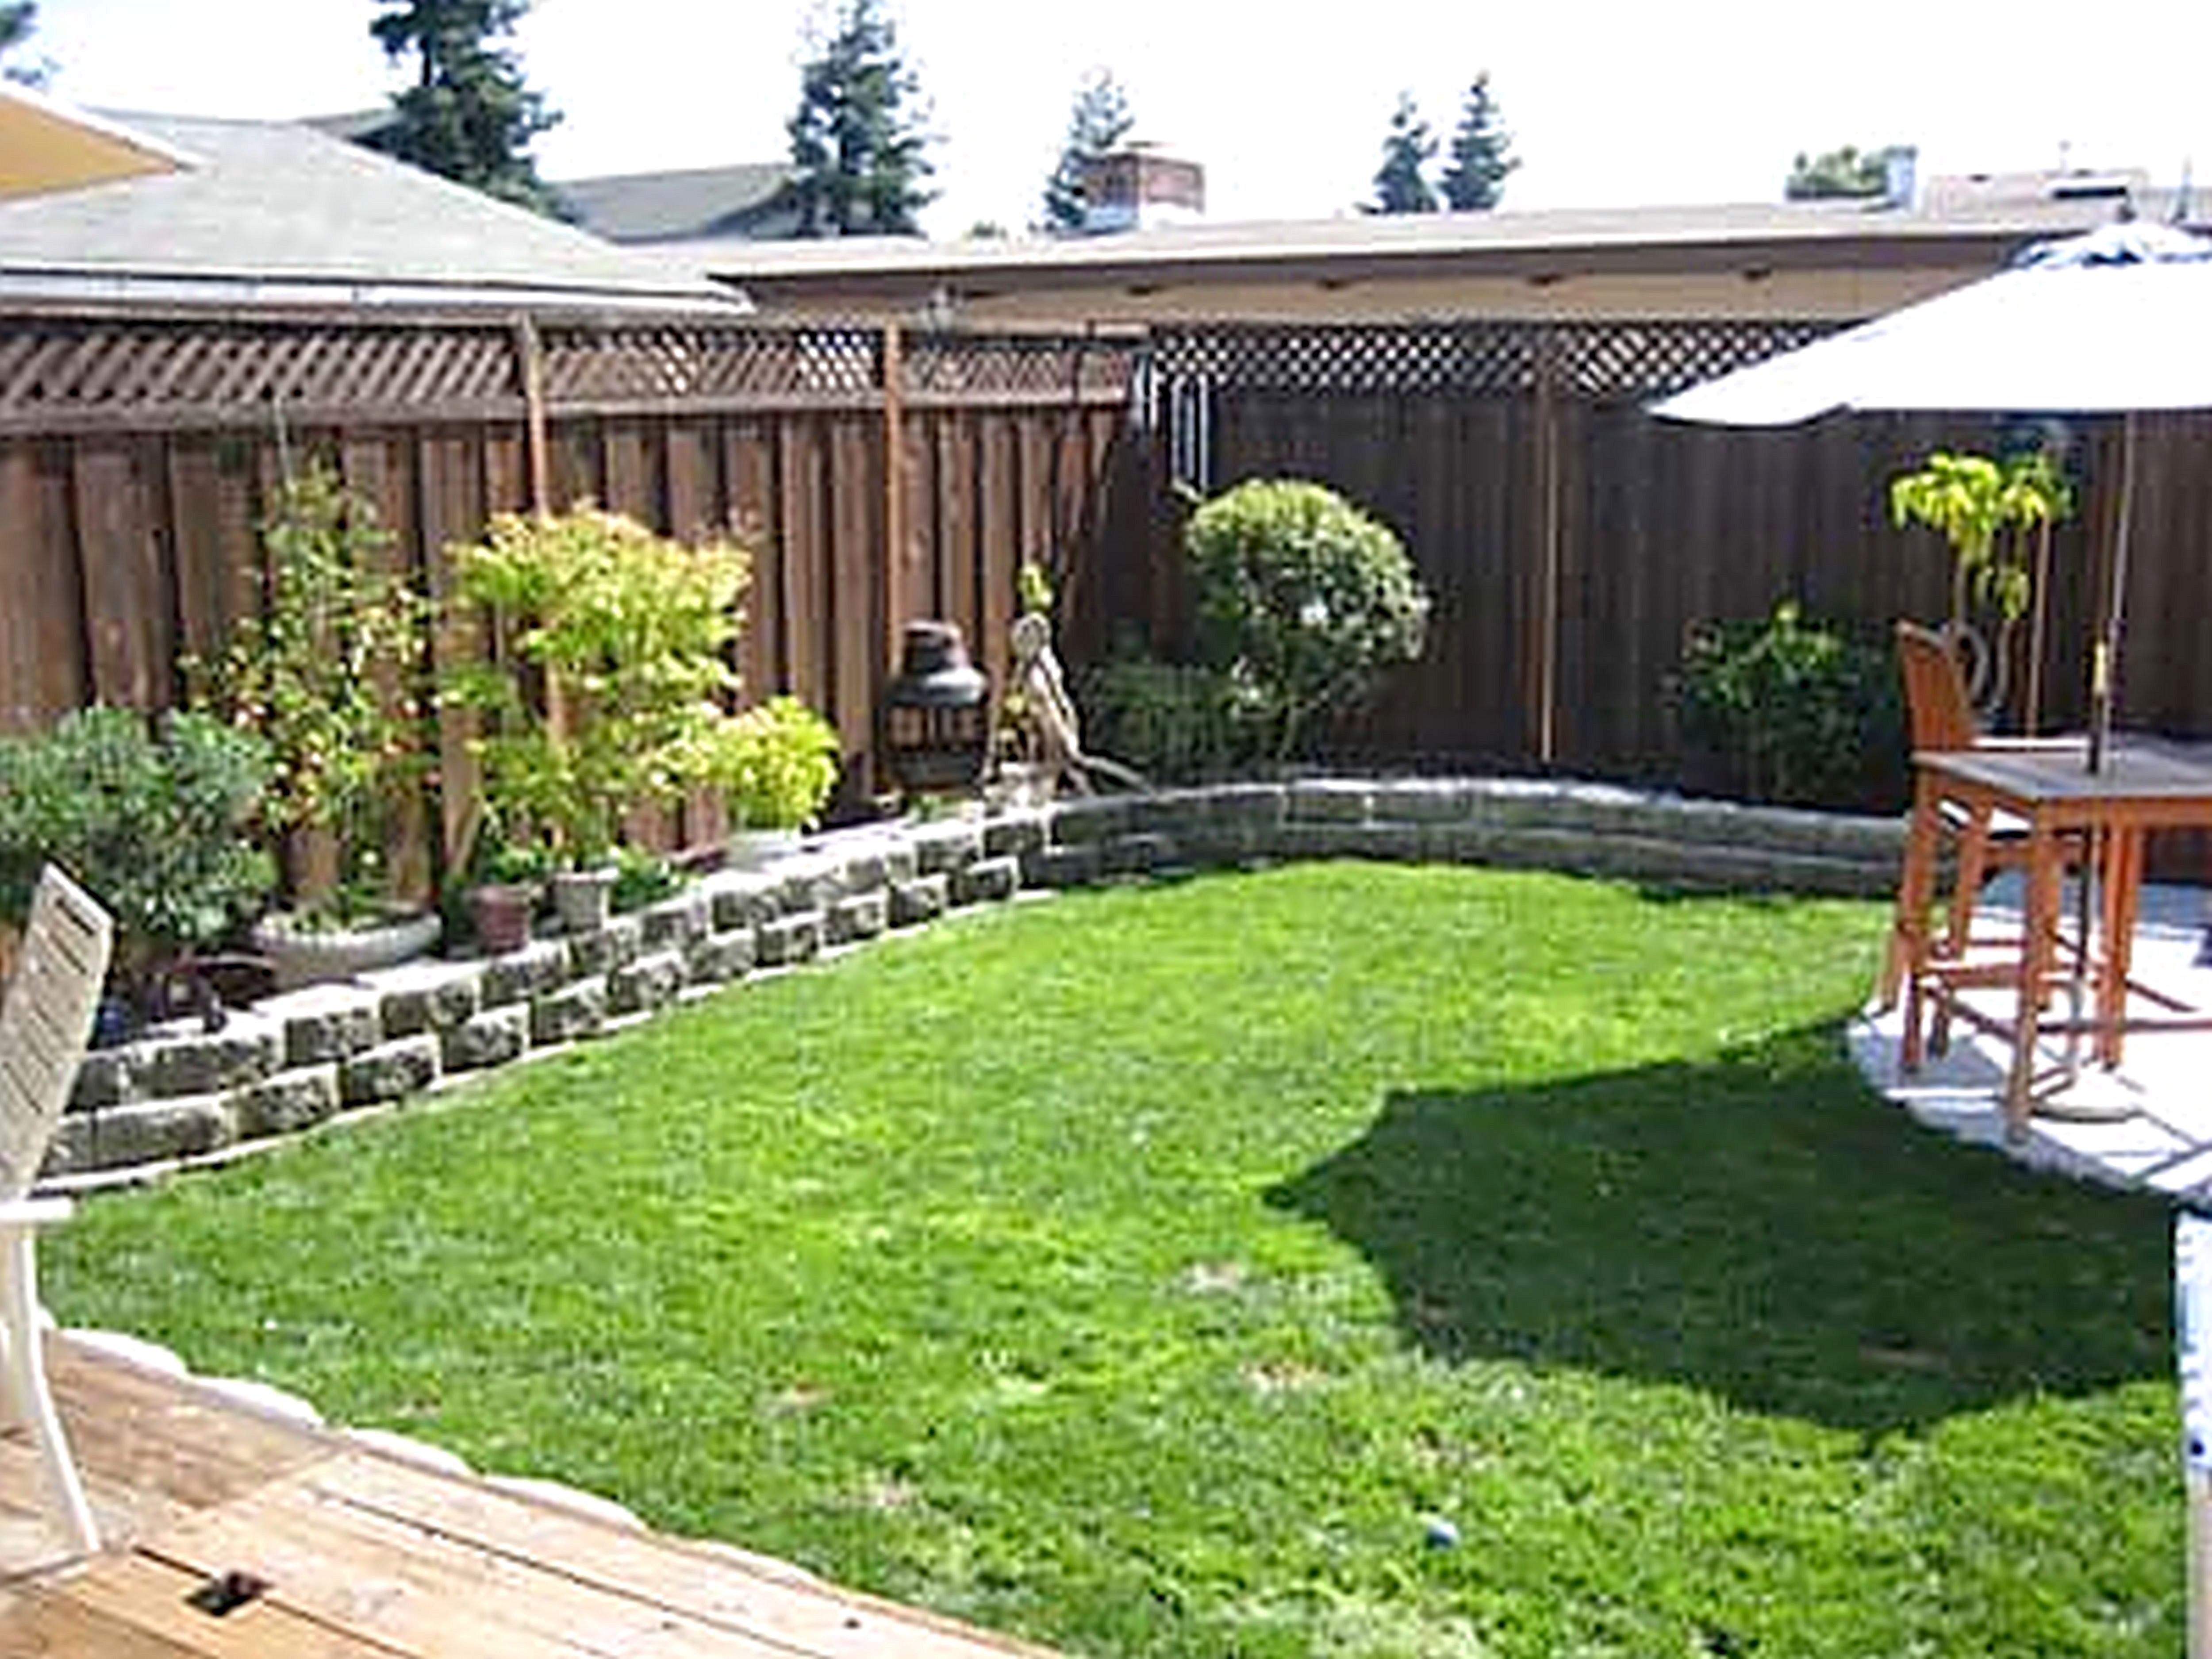 A Budget Large Backyard Landscaping